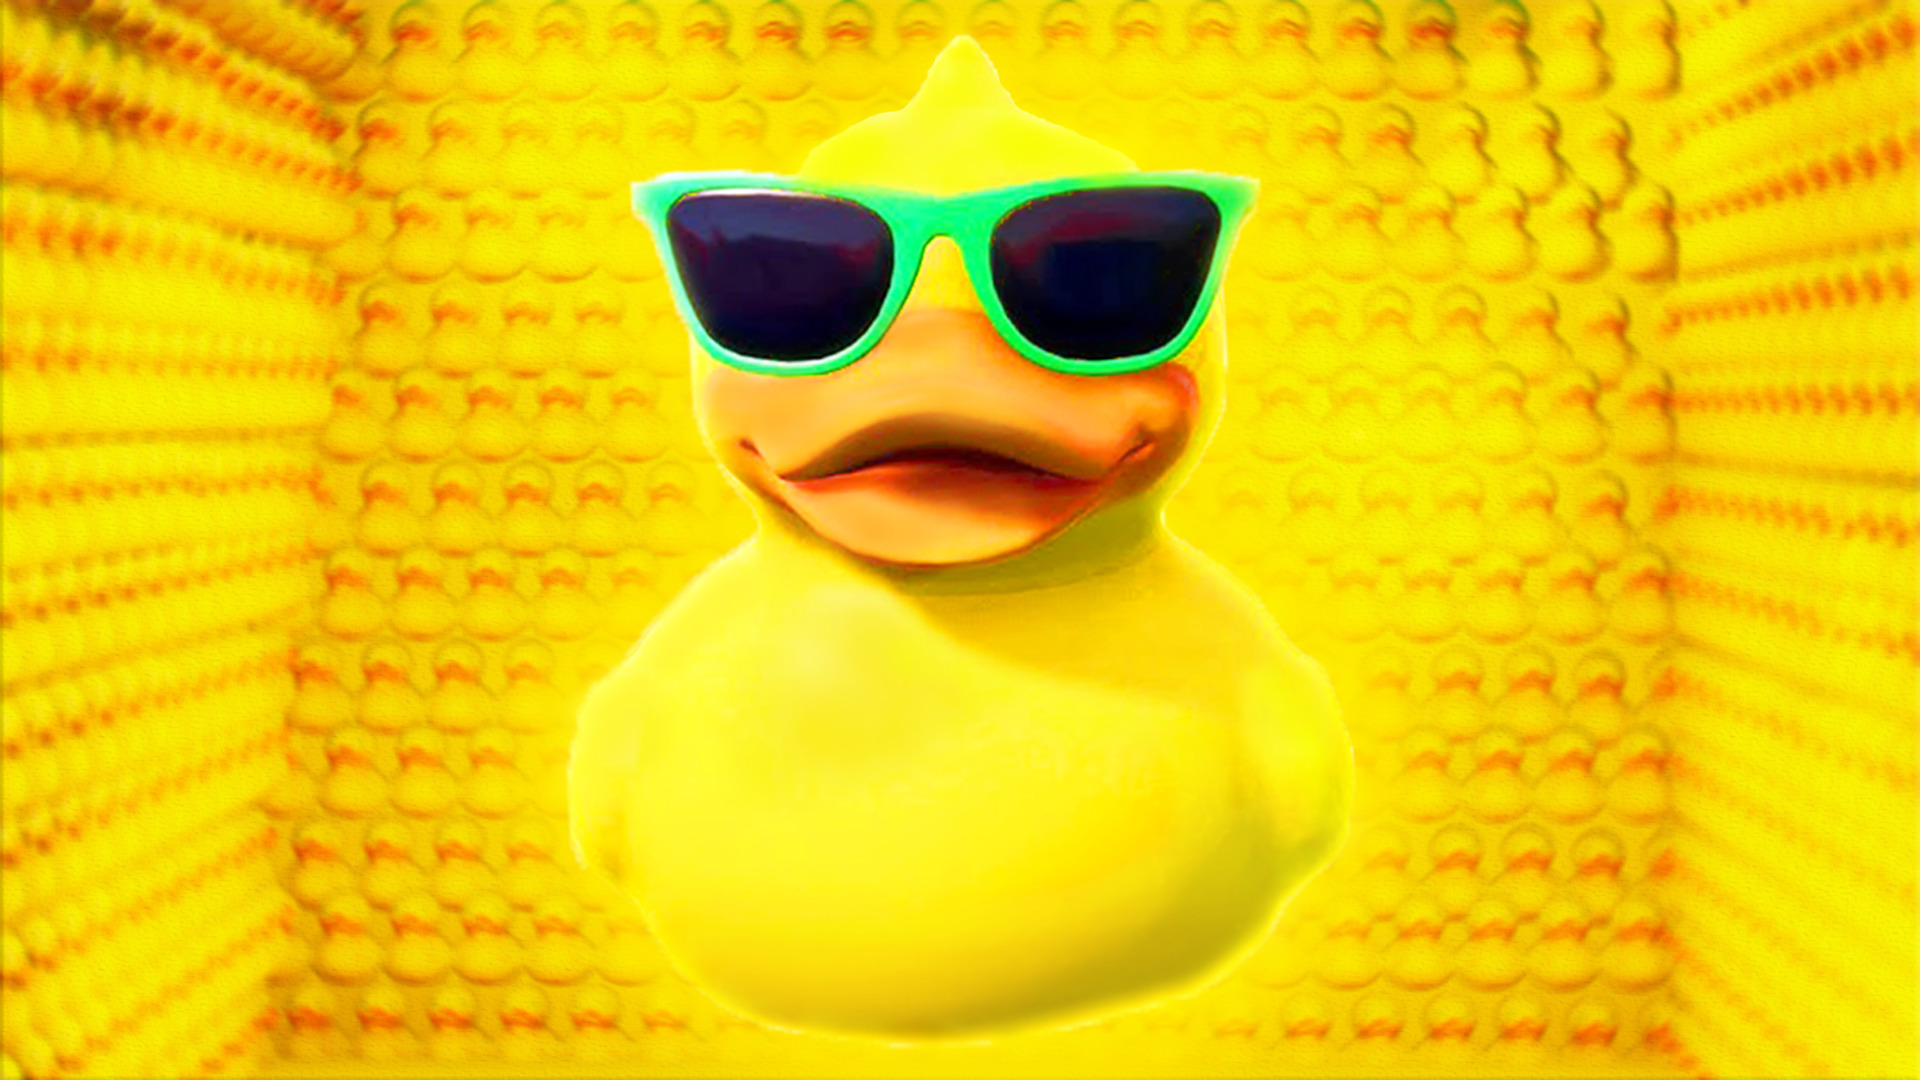 Duck with glasses ð ducks depot dux â fortnite creative map code